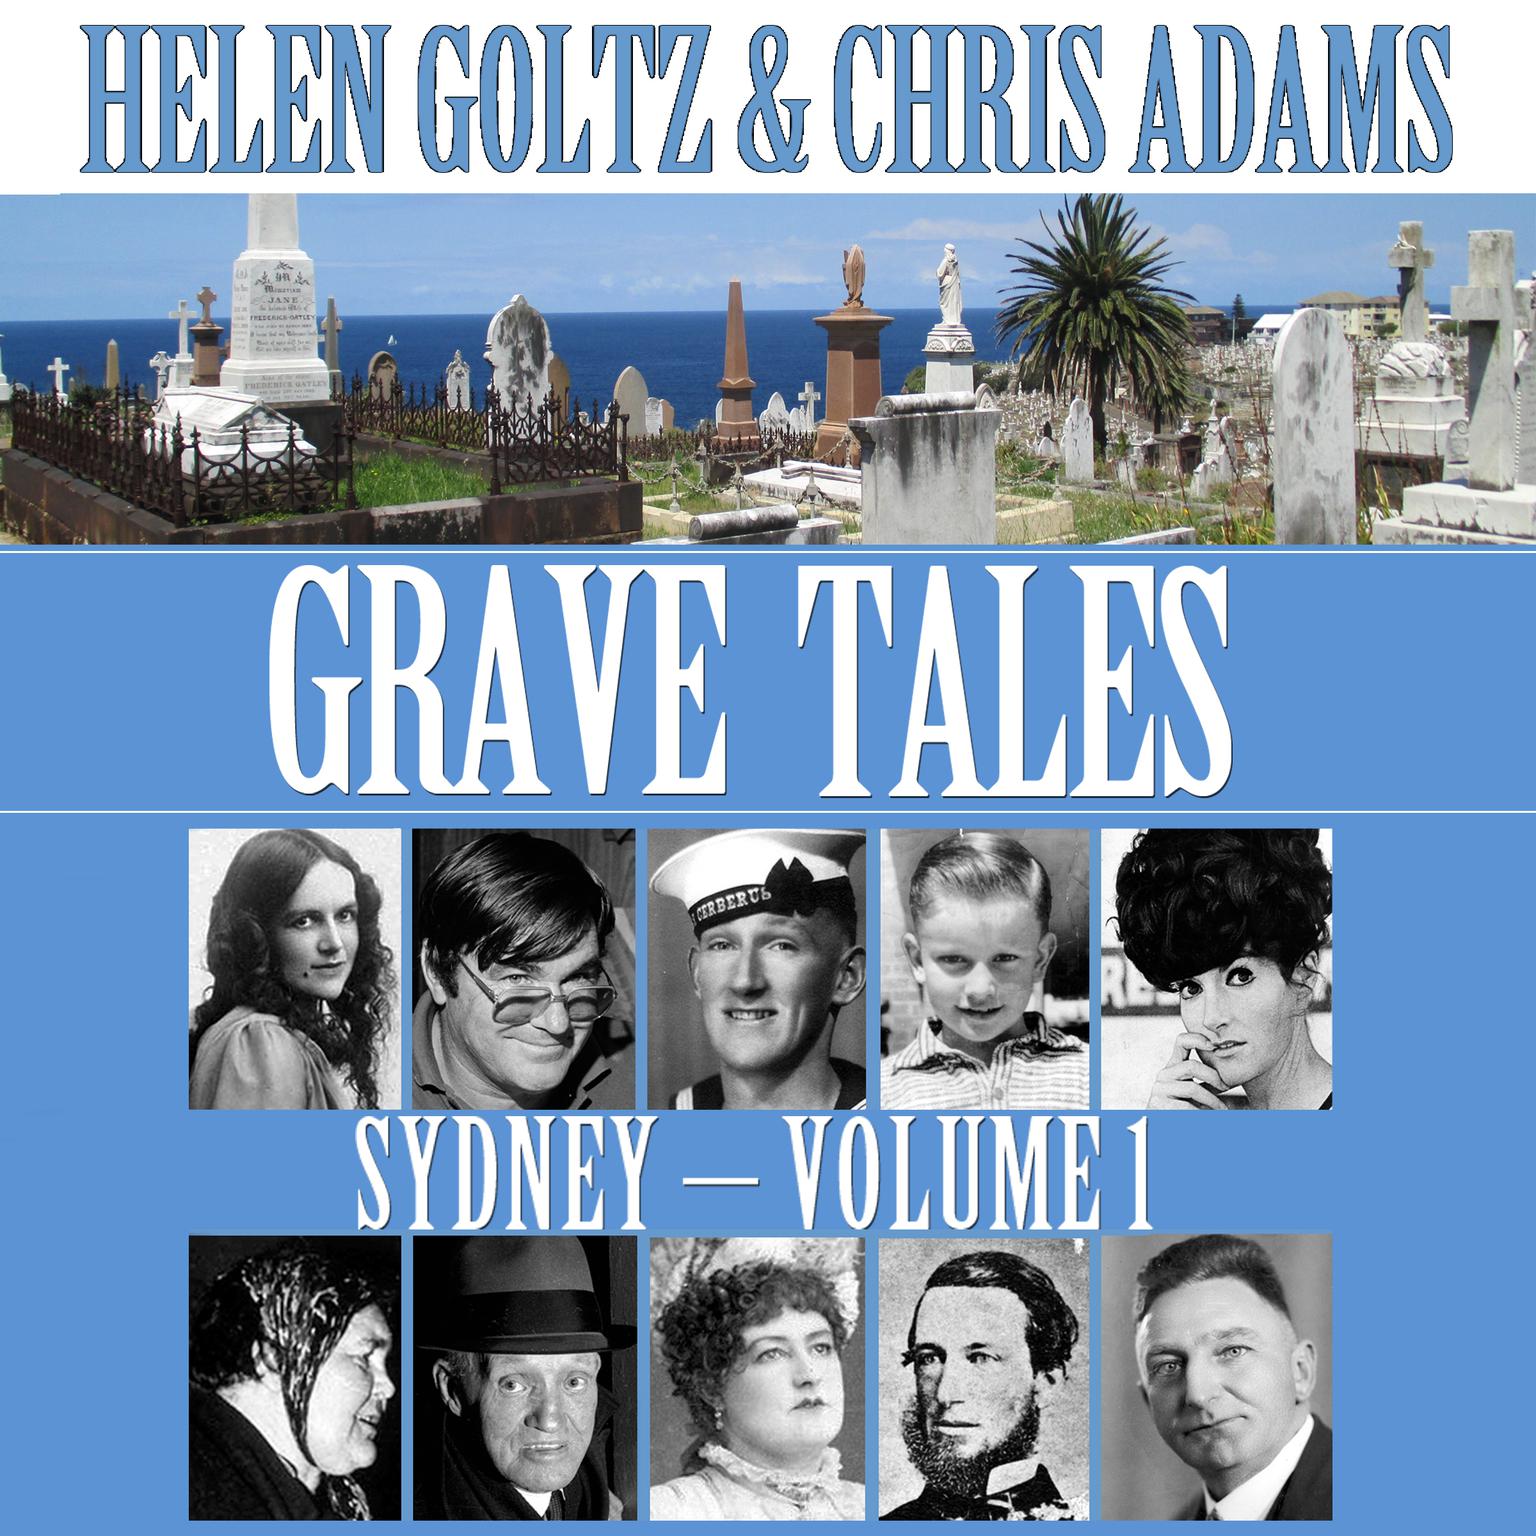 Grave Tales: Sydney Vol.1 Audiobook, by Helen Goltz